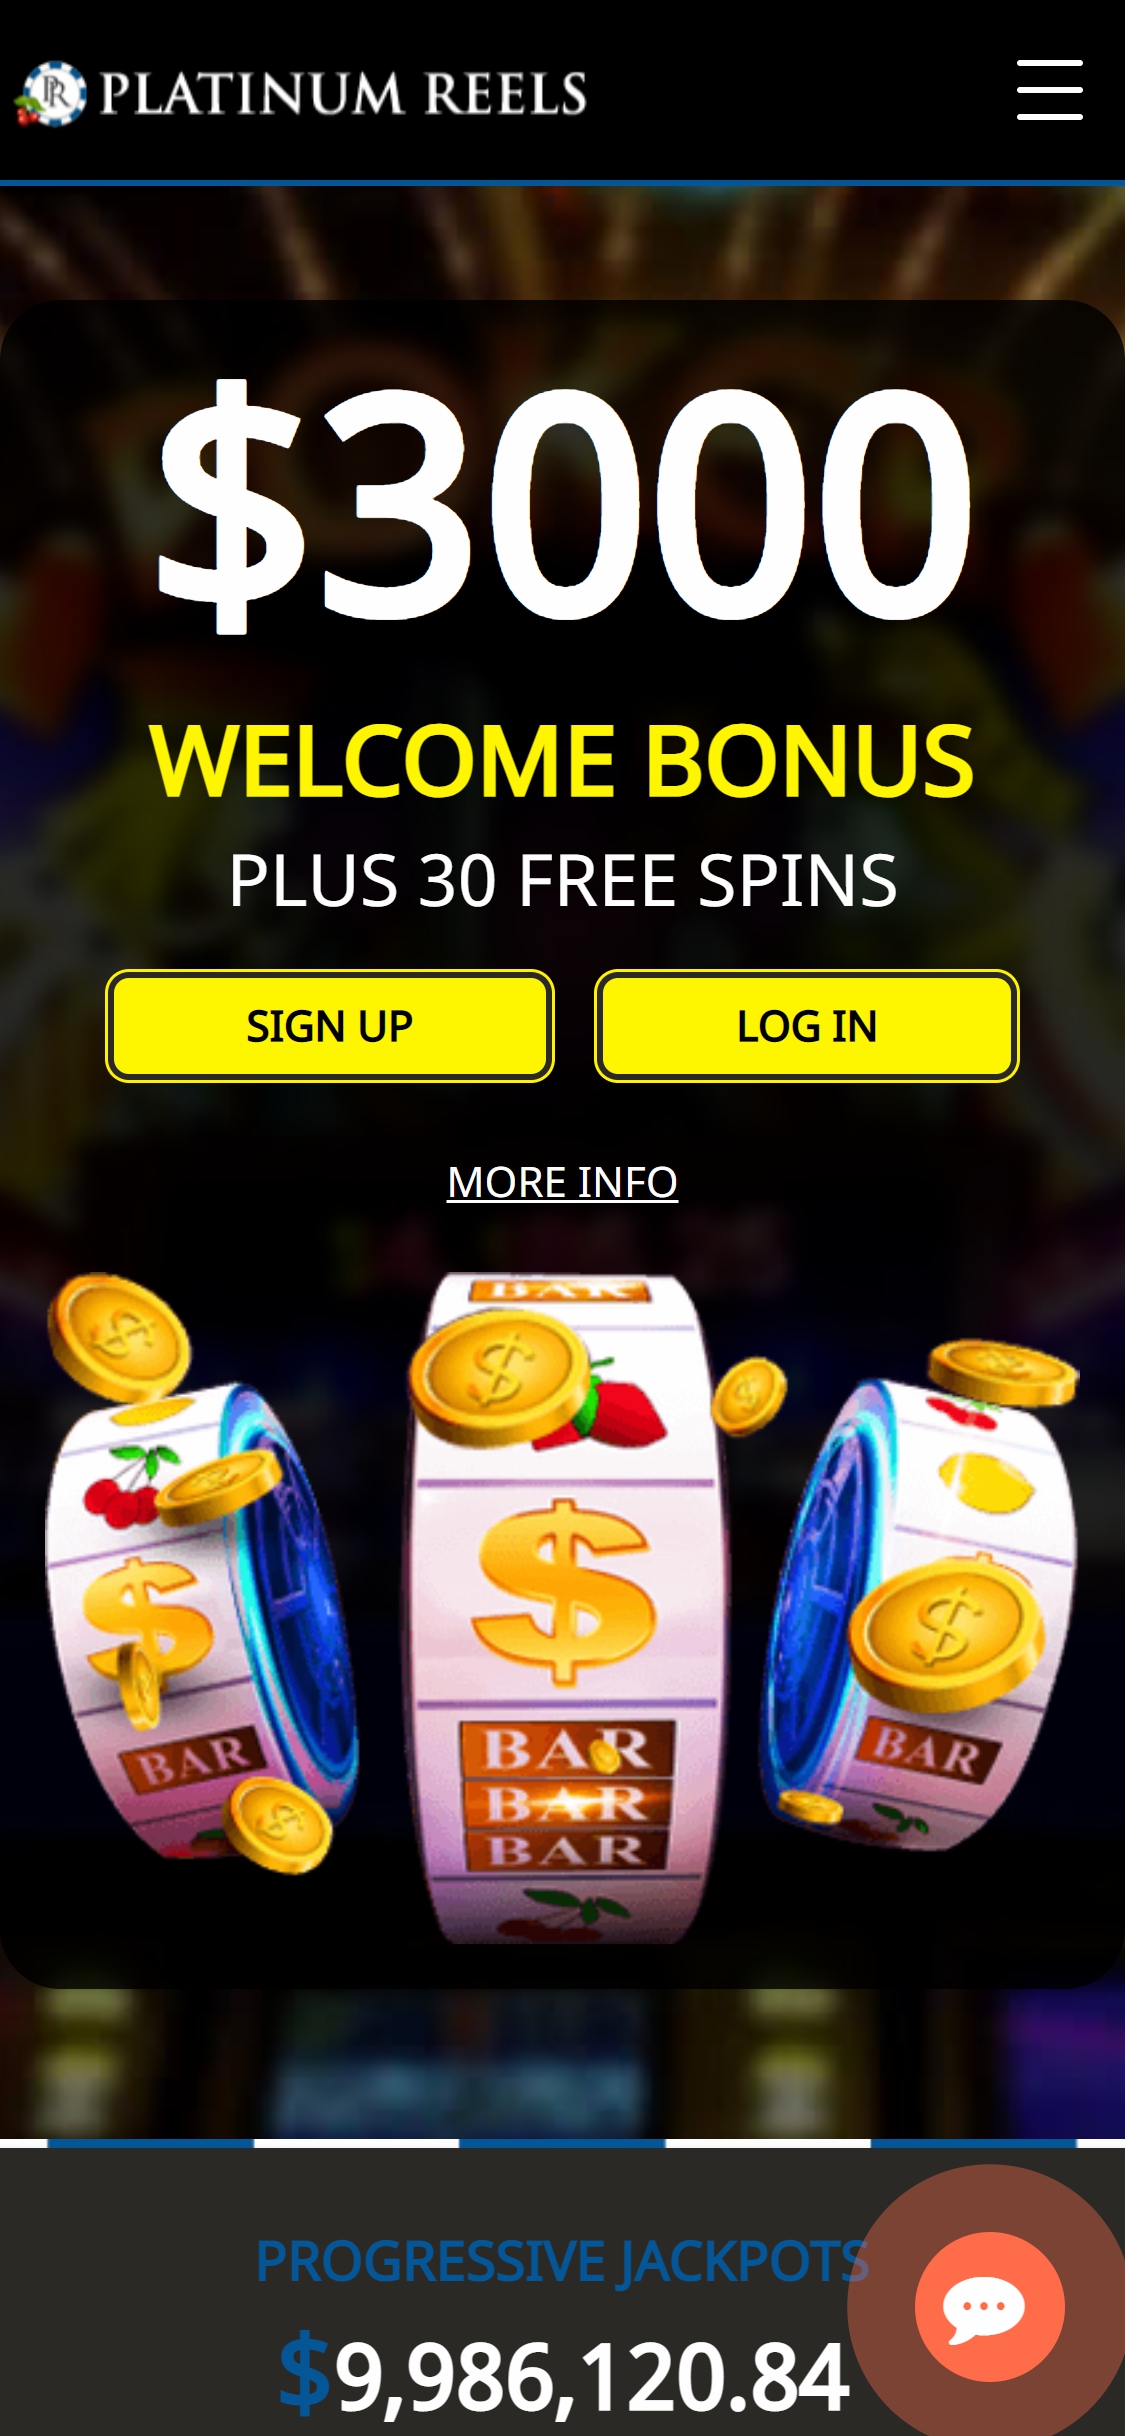 Platinum Reels Casino Mobile Review